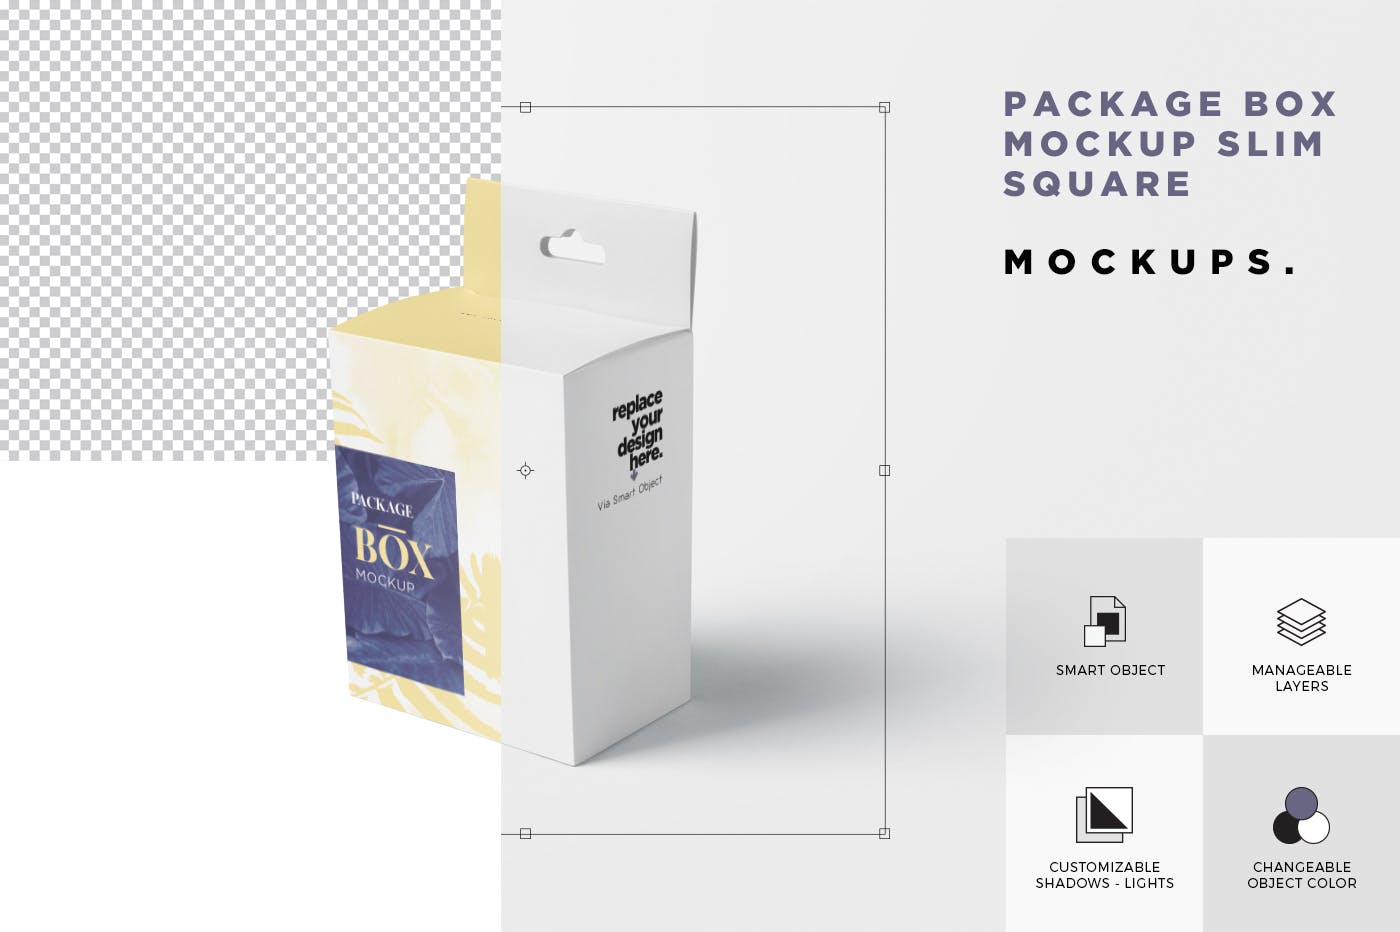 挂耳式扁平矩形包装盒蚂蚁素材精选模板 Package Box Mockup Set – Slim Square with Hanger插图(6)